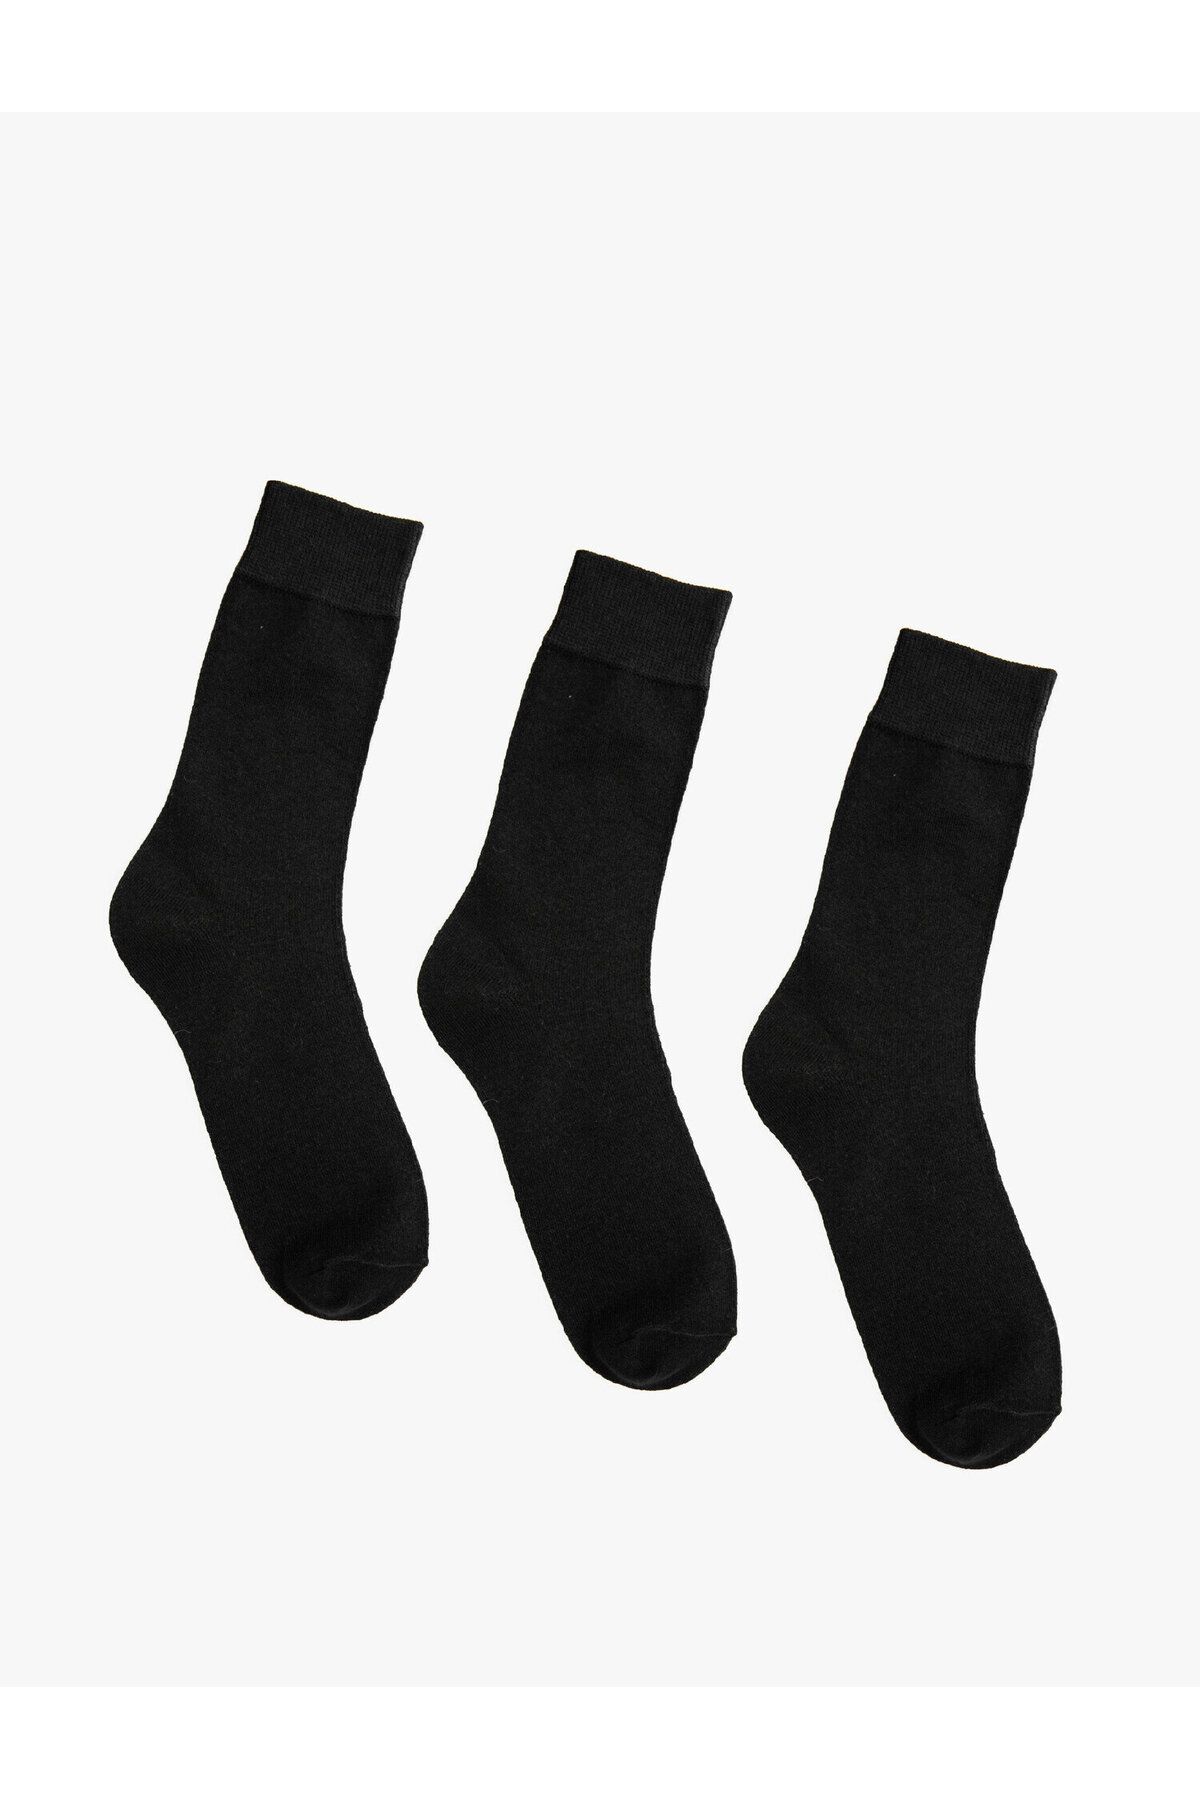 Koton Erkek 3'lü Soket Çorap Seti